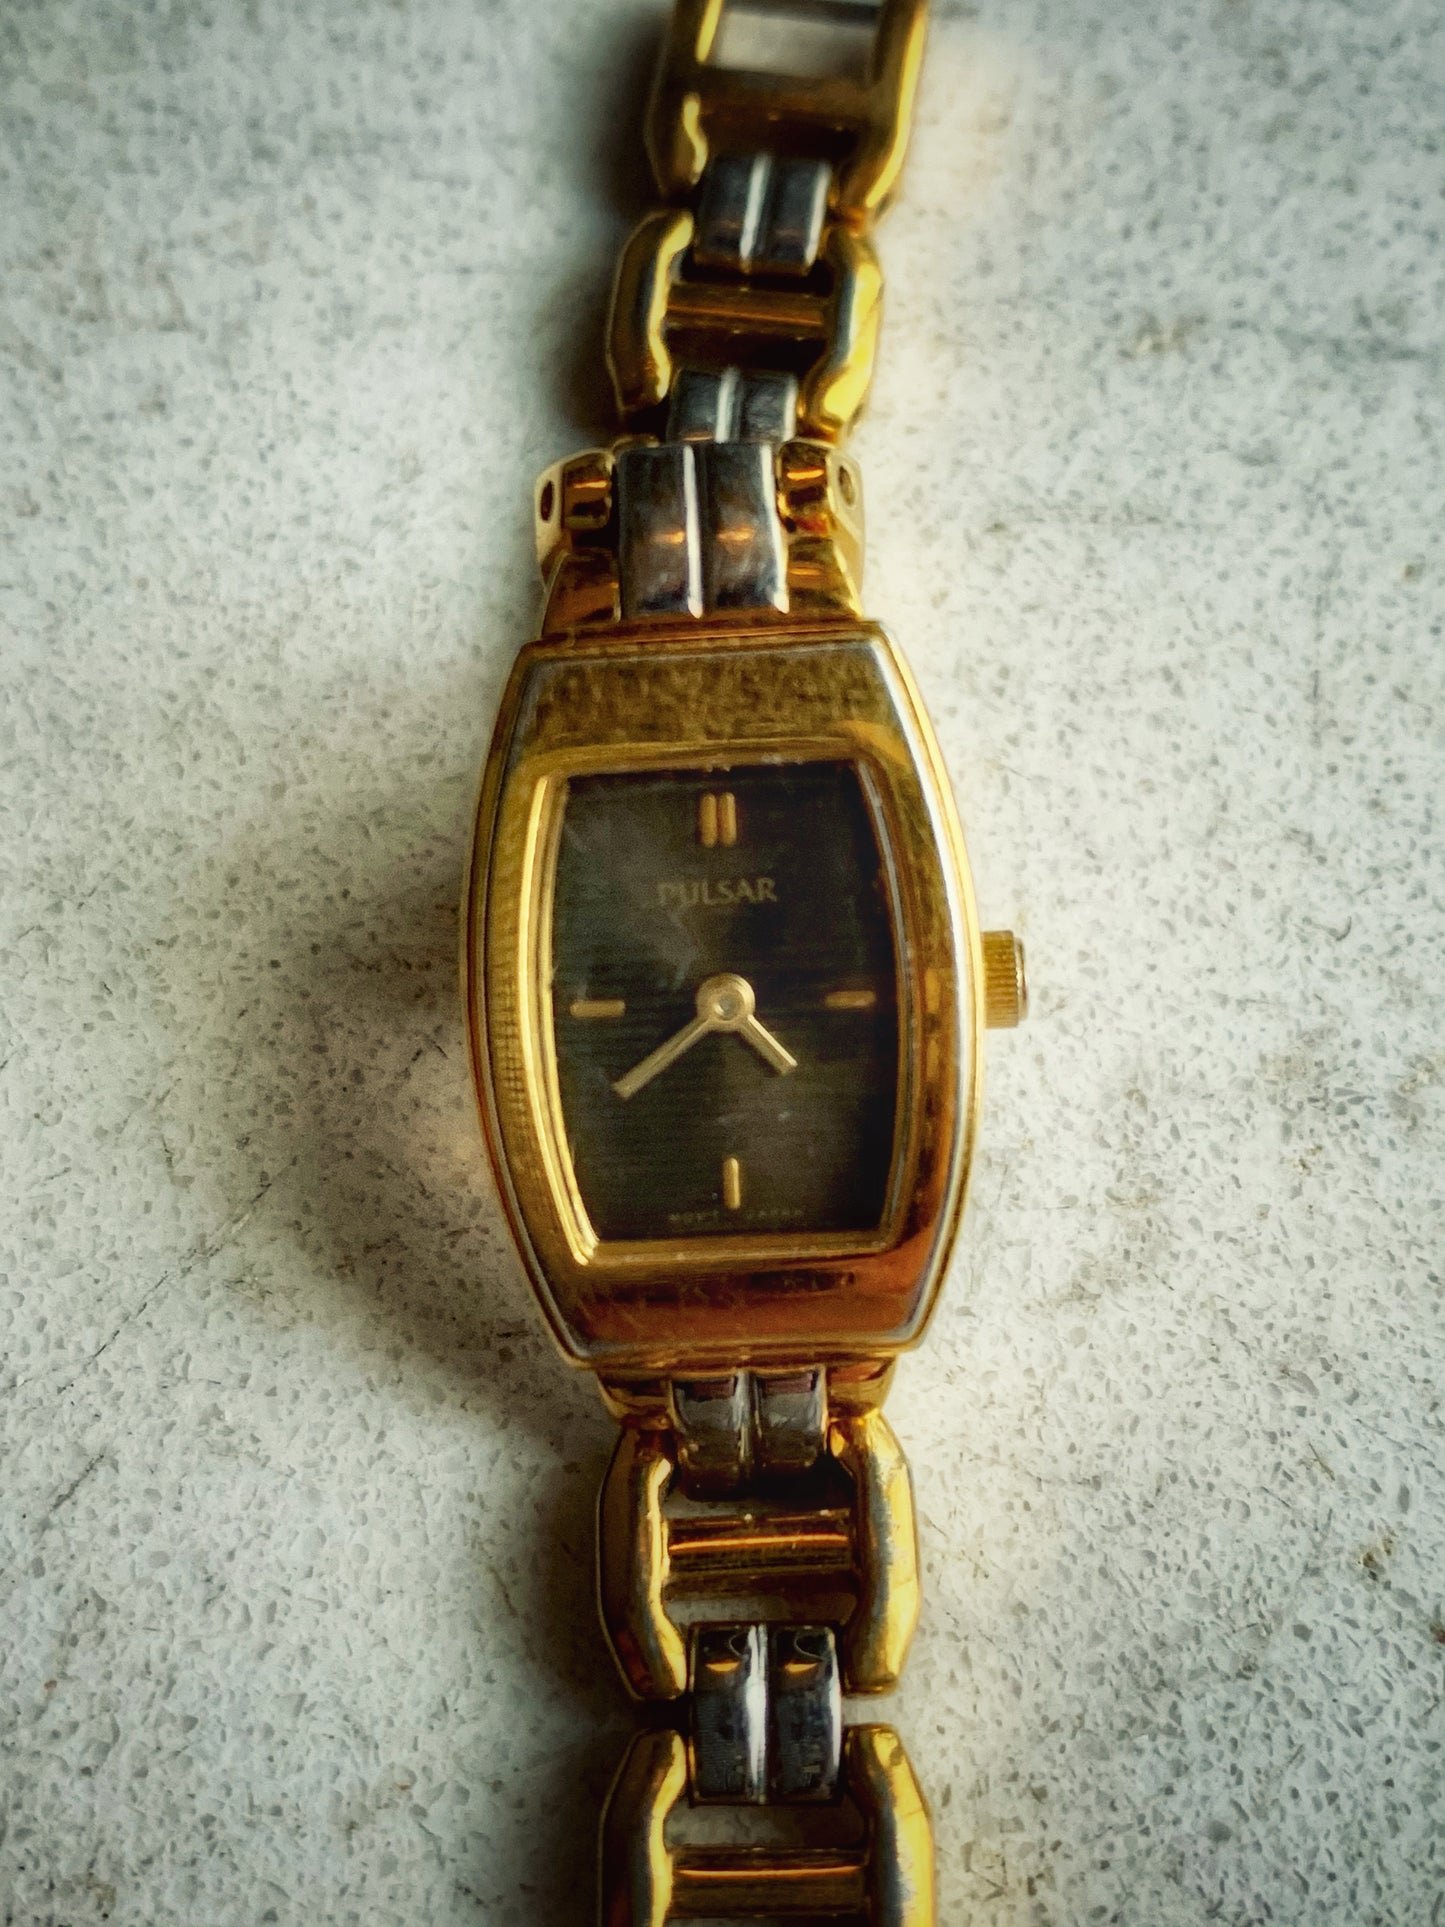 90s Pulsar women’s wrist watch